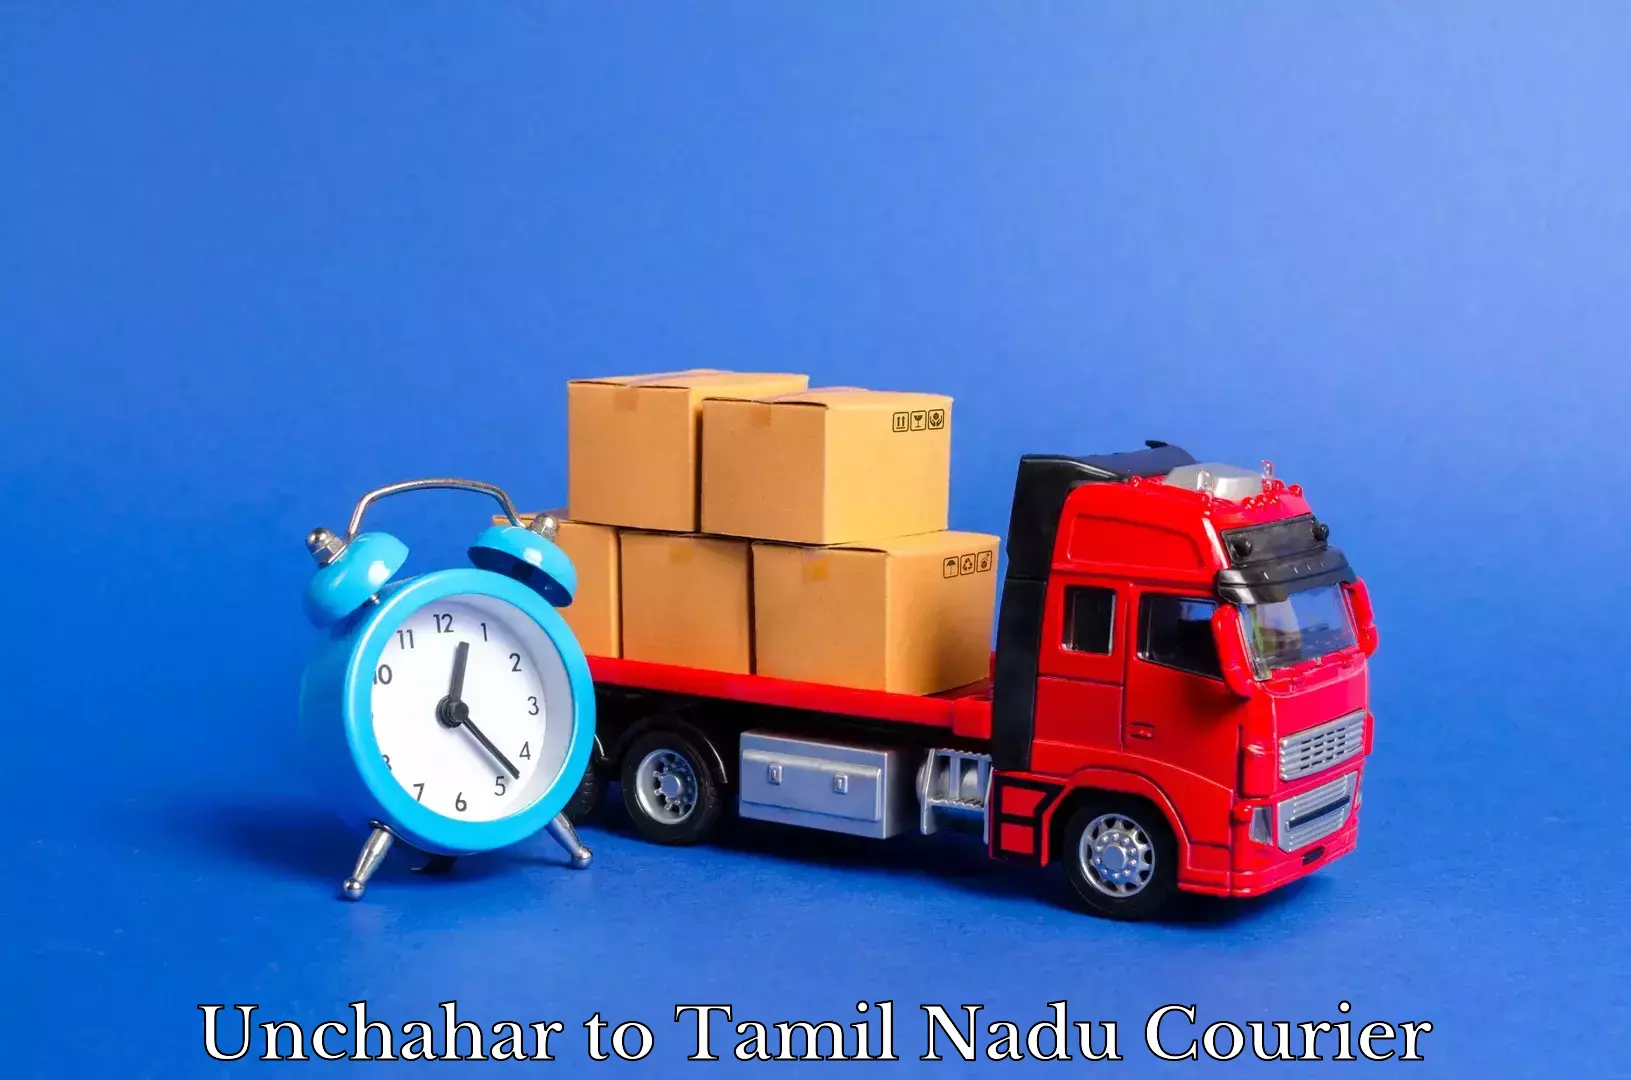 Professional furniture movers Unchahar to Melmaruvathur